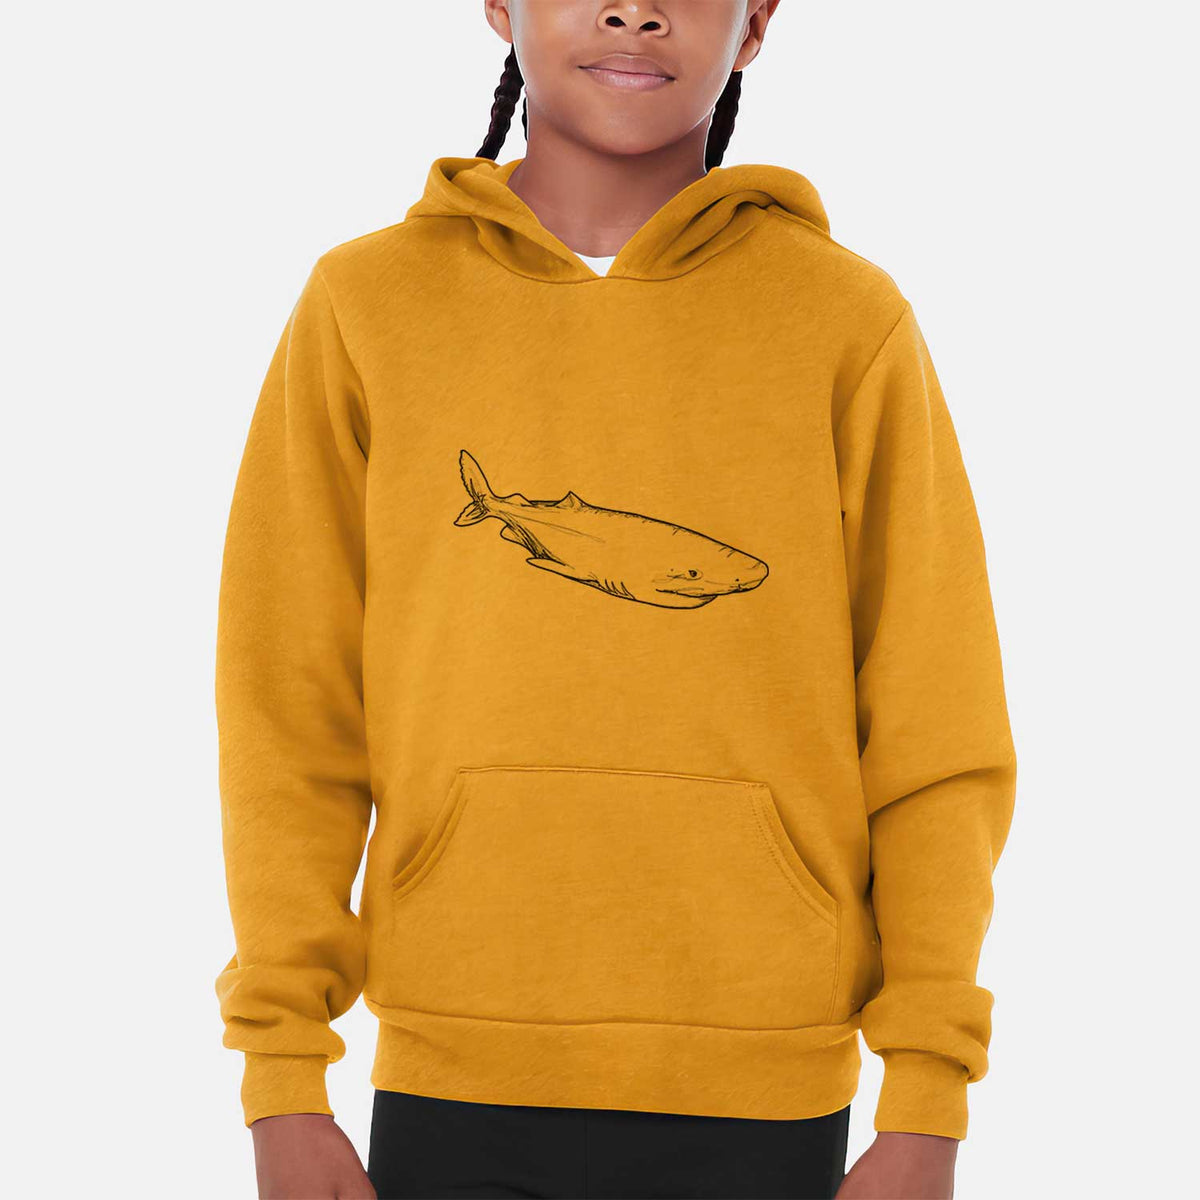 Greenland Shark - Youth Hoodie Sweatshirt